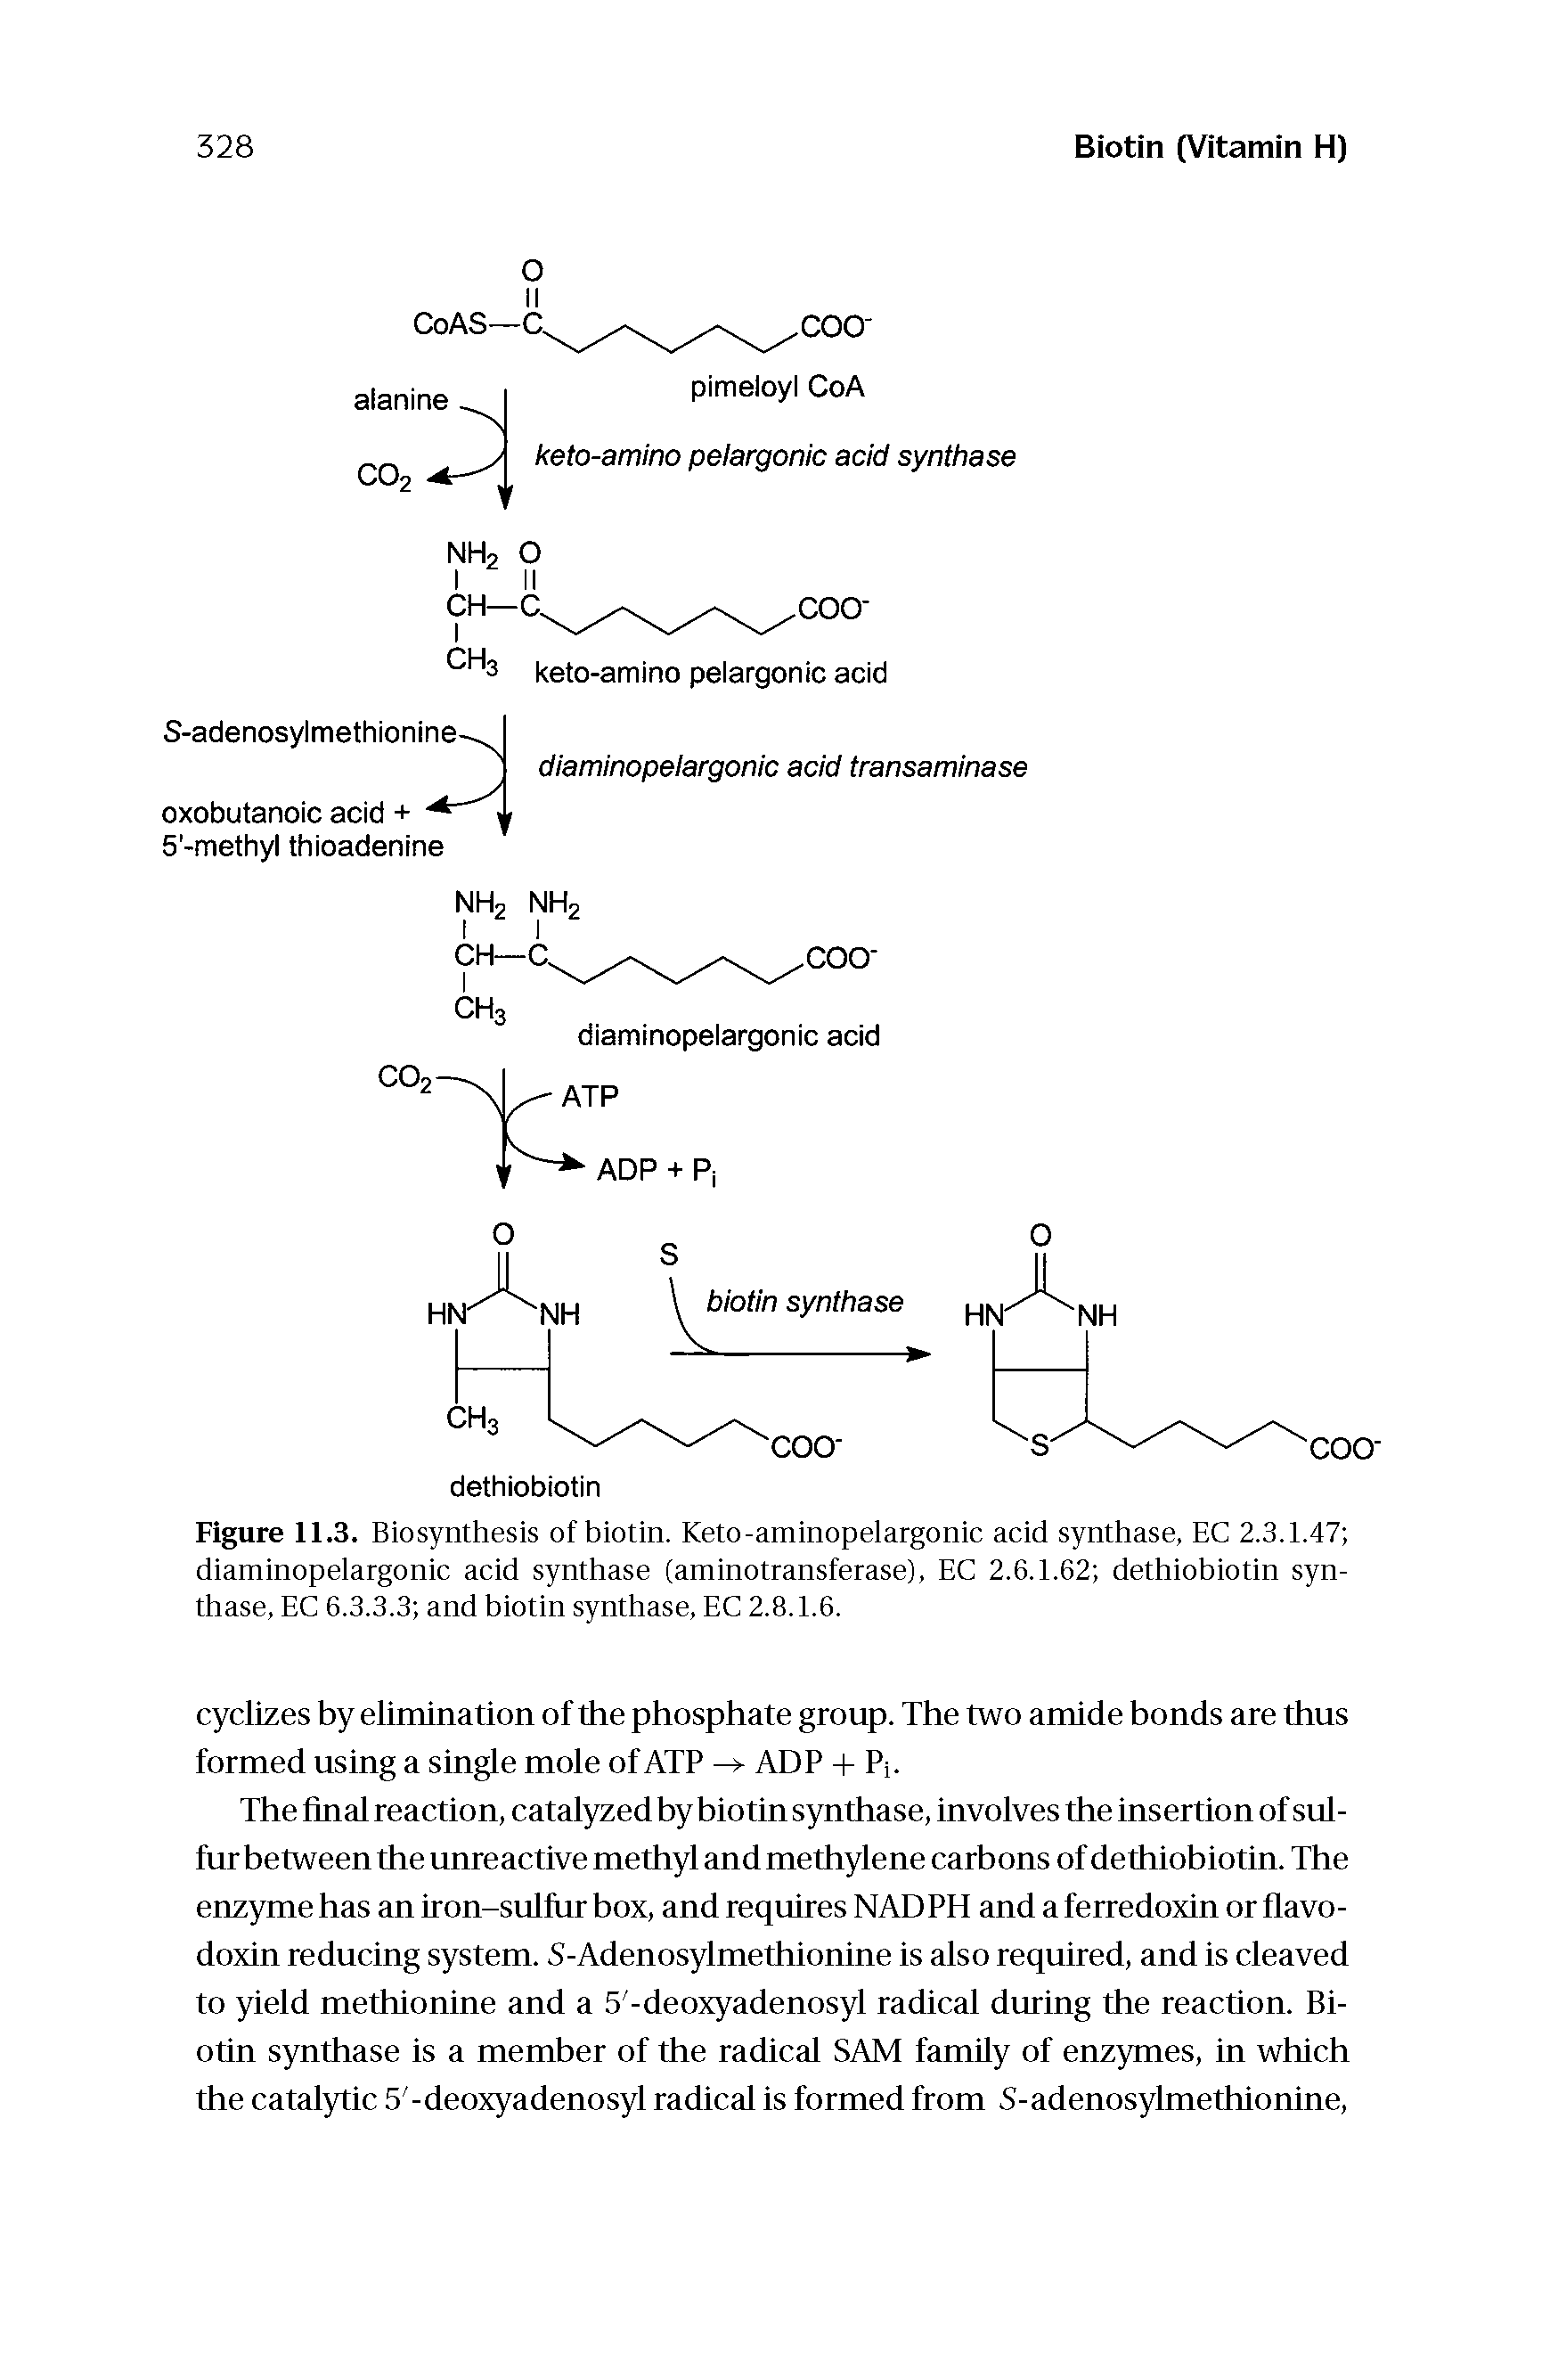 Figure 11.3. Biosynthesis of biotin. Keto-aminopelargonic acid synthase, EC 2.3.1.47 diaminopelargonic acid synthase (aminotransferase), EC 2.6.1.62 dethiobiotin synthase, EC 6.3.3.3 and biotin synthase, EC 2.8.1.6.